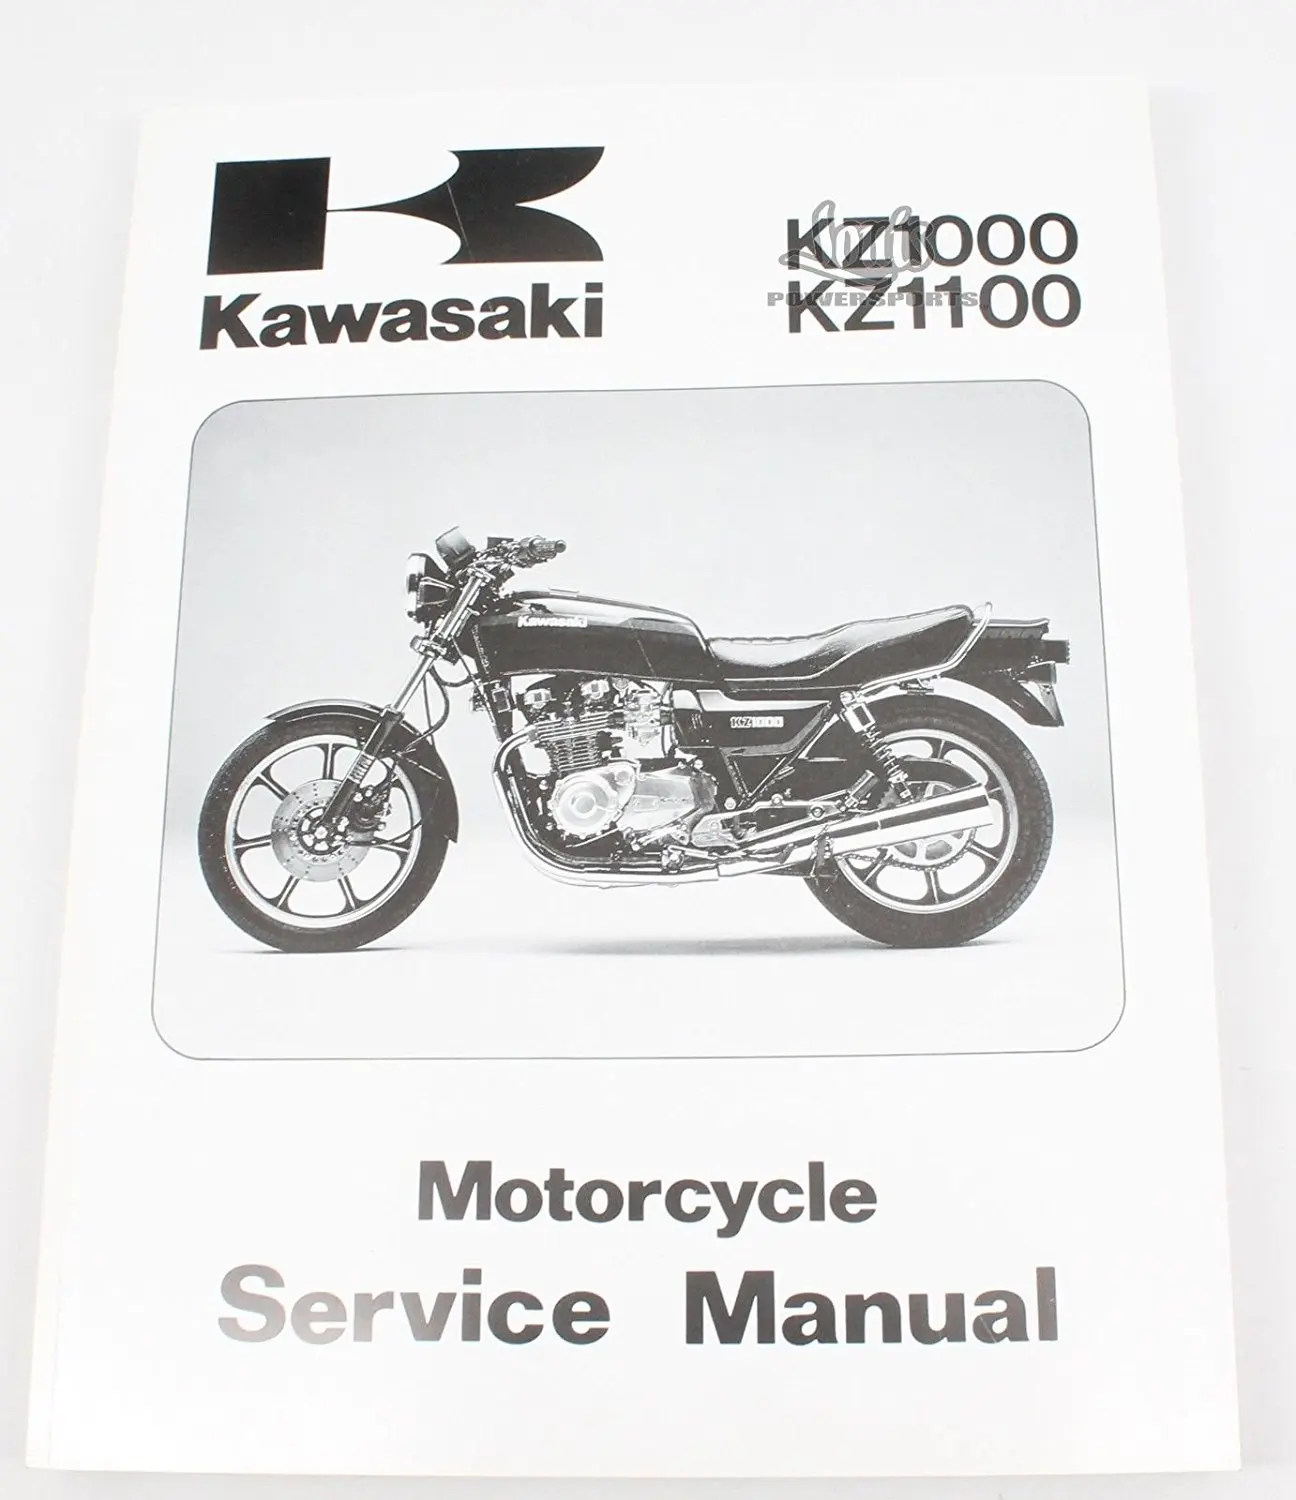 Kawasaki Kz1000 Police Service Manual Download